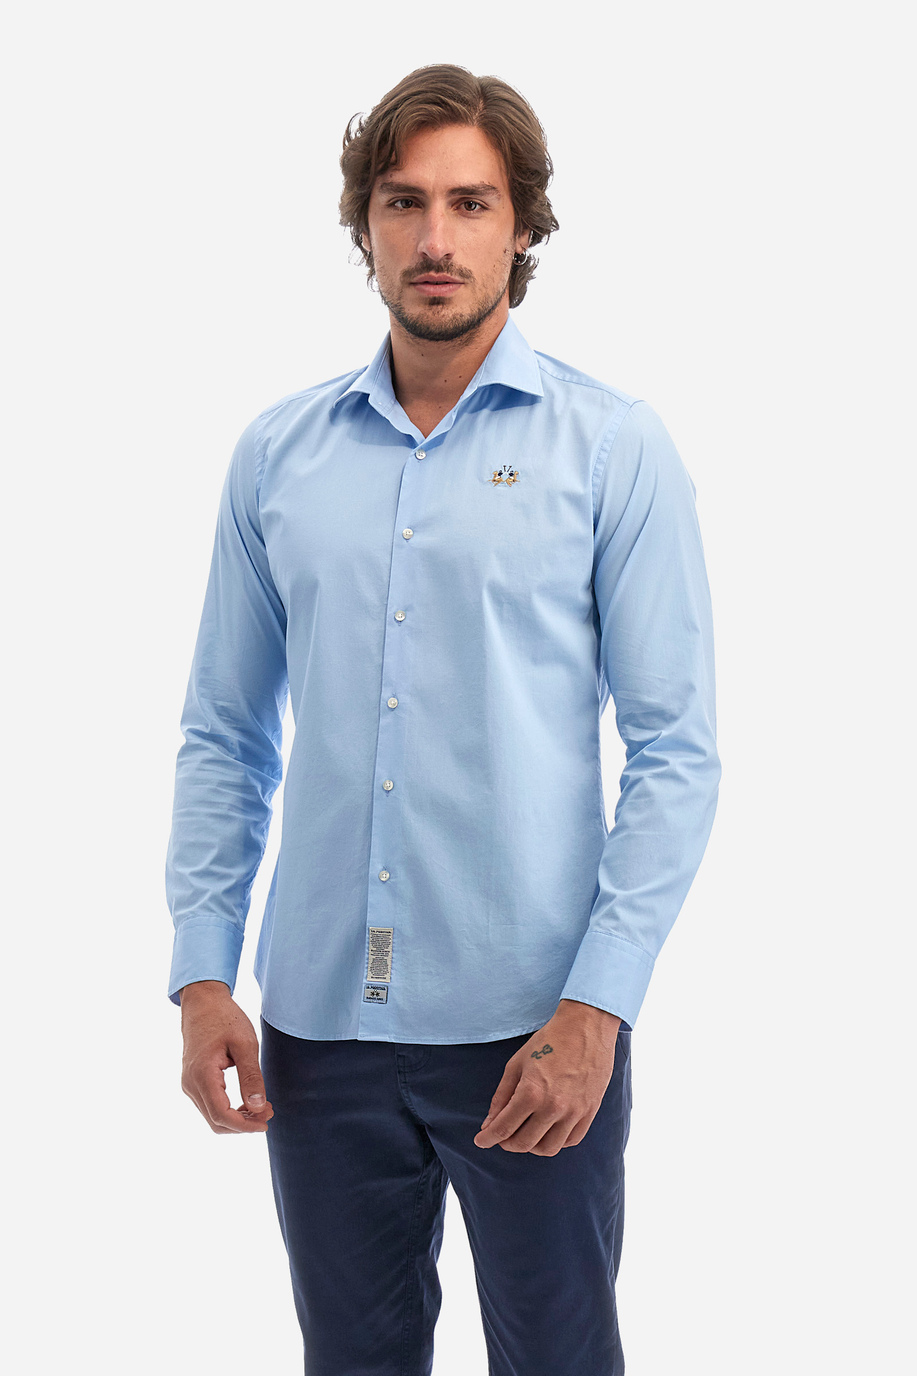 Herrenhemd Slim-Logo klein - Innocent - Hemden | La Martina - Official Online Shop